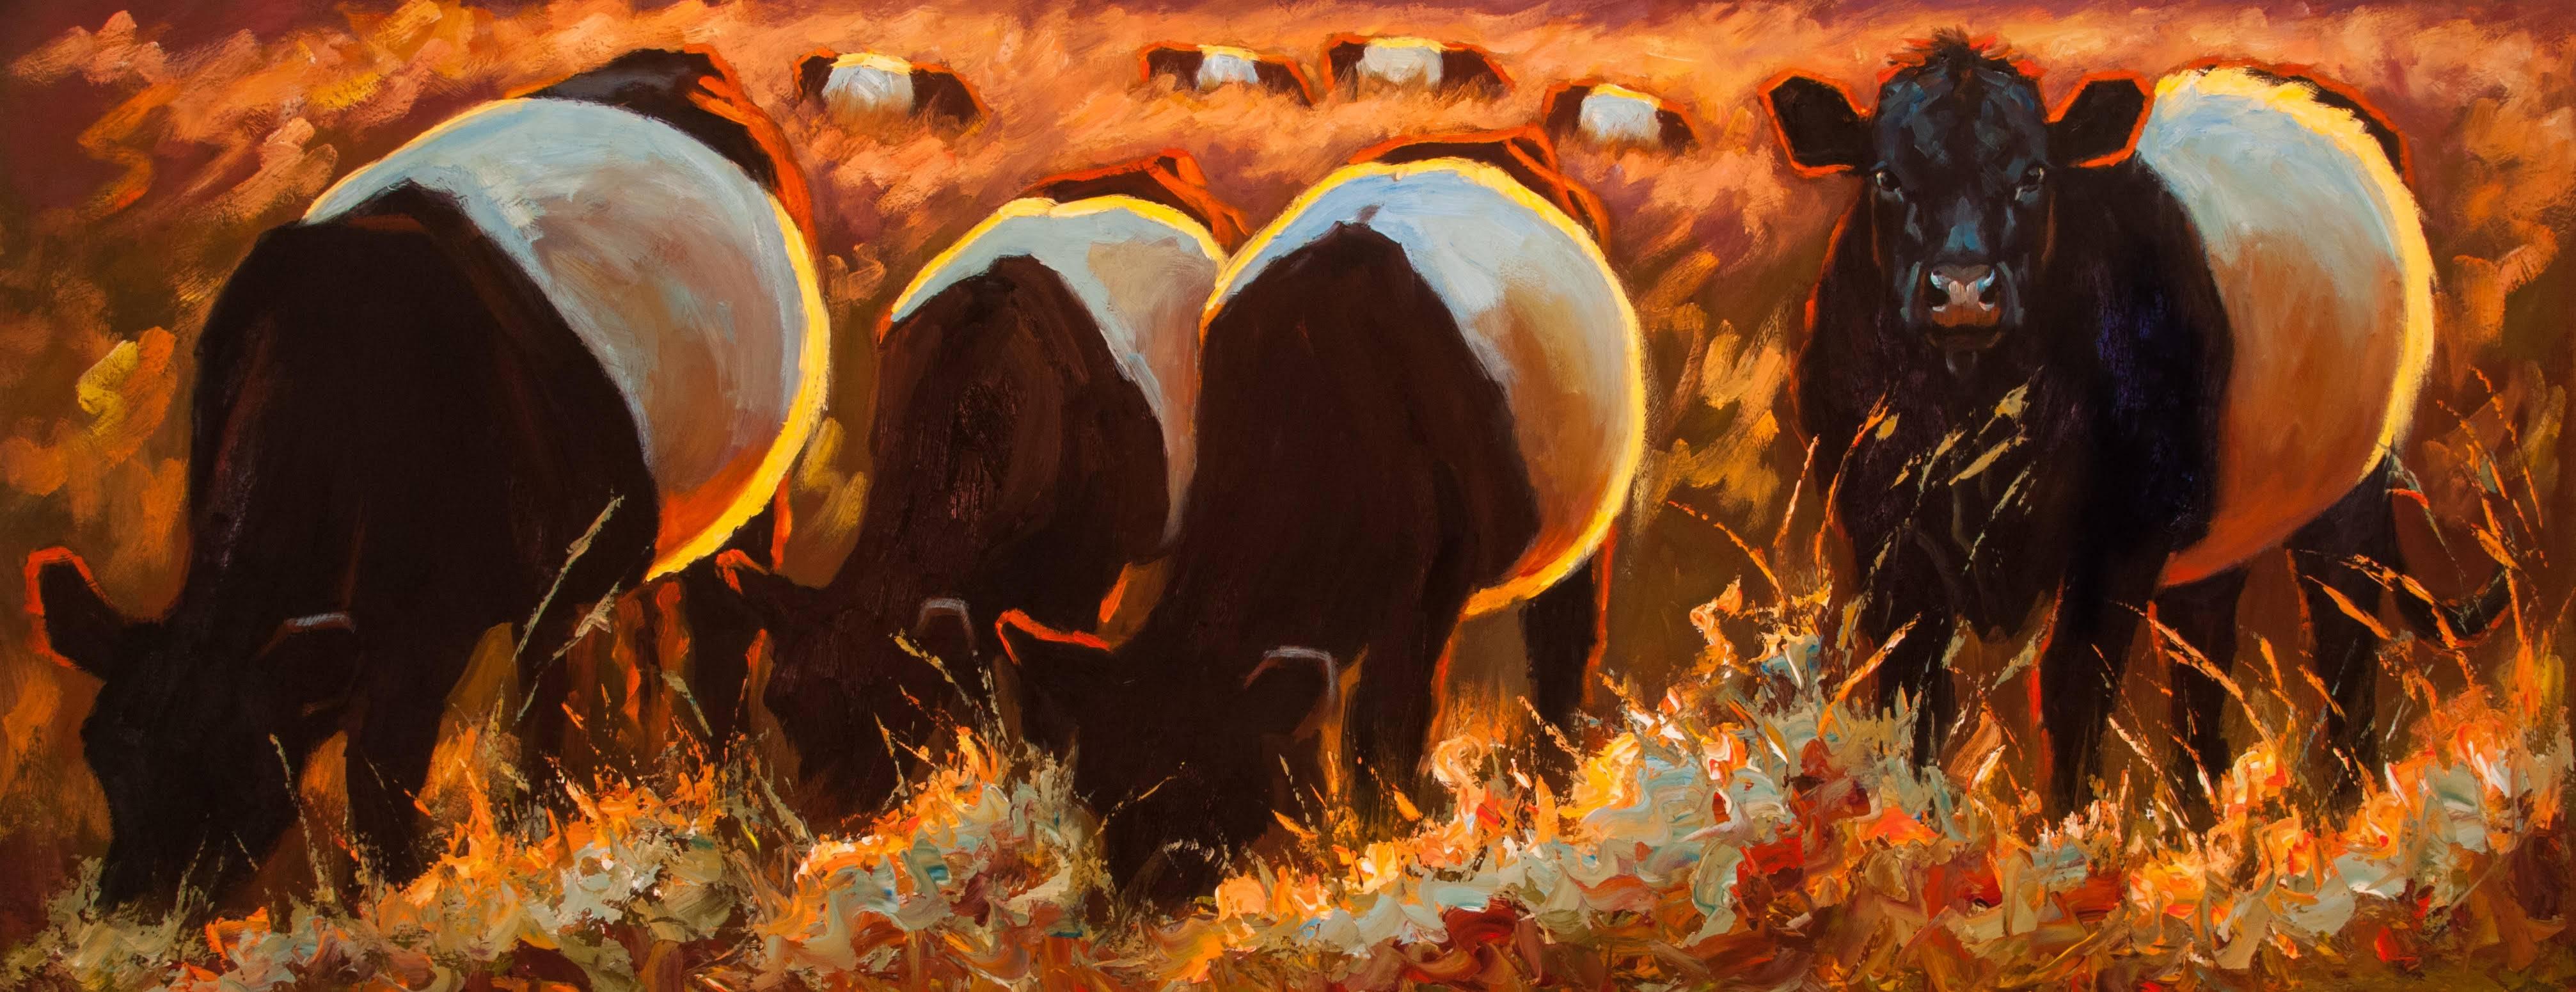 Cheri Christensen Animal Painting - "Vineyard Oreos" Black and White Cows in Warm Dramatic Summer Evening Light